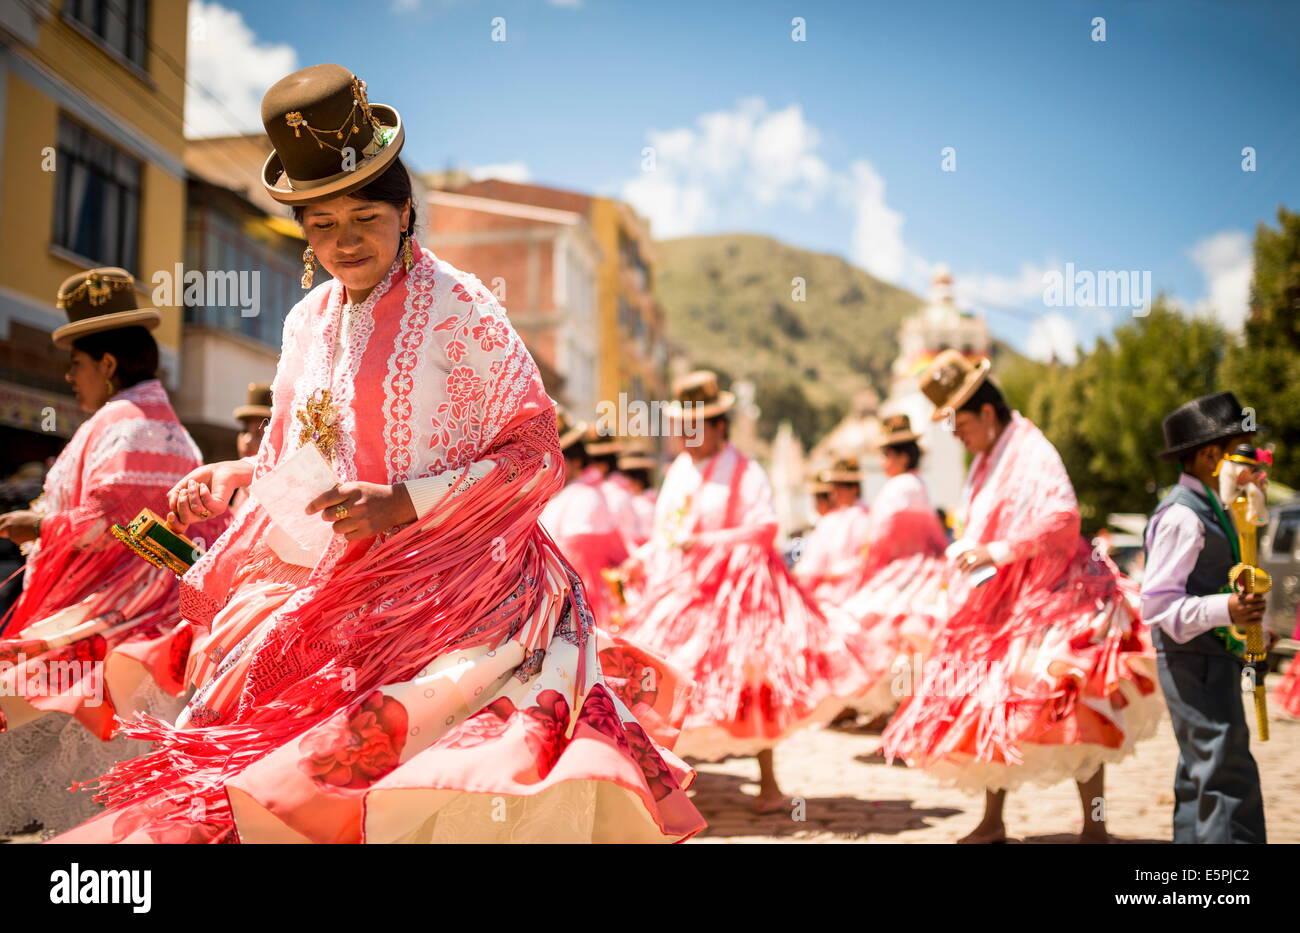 Dancers in traditional dress, Fiesta de la Virgen de la Candelaria, Copacabana, Lake Titicaca, Bolivia, South America Stock Photo